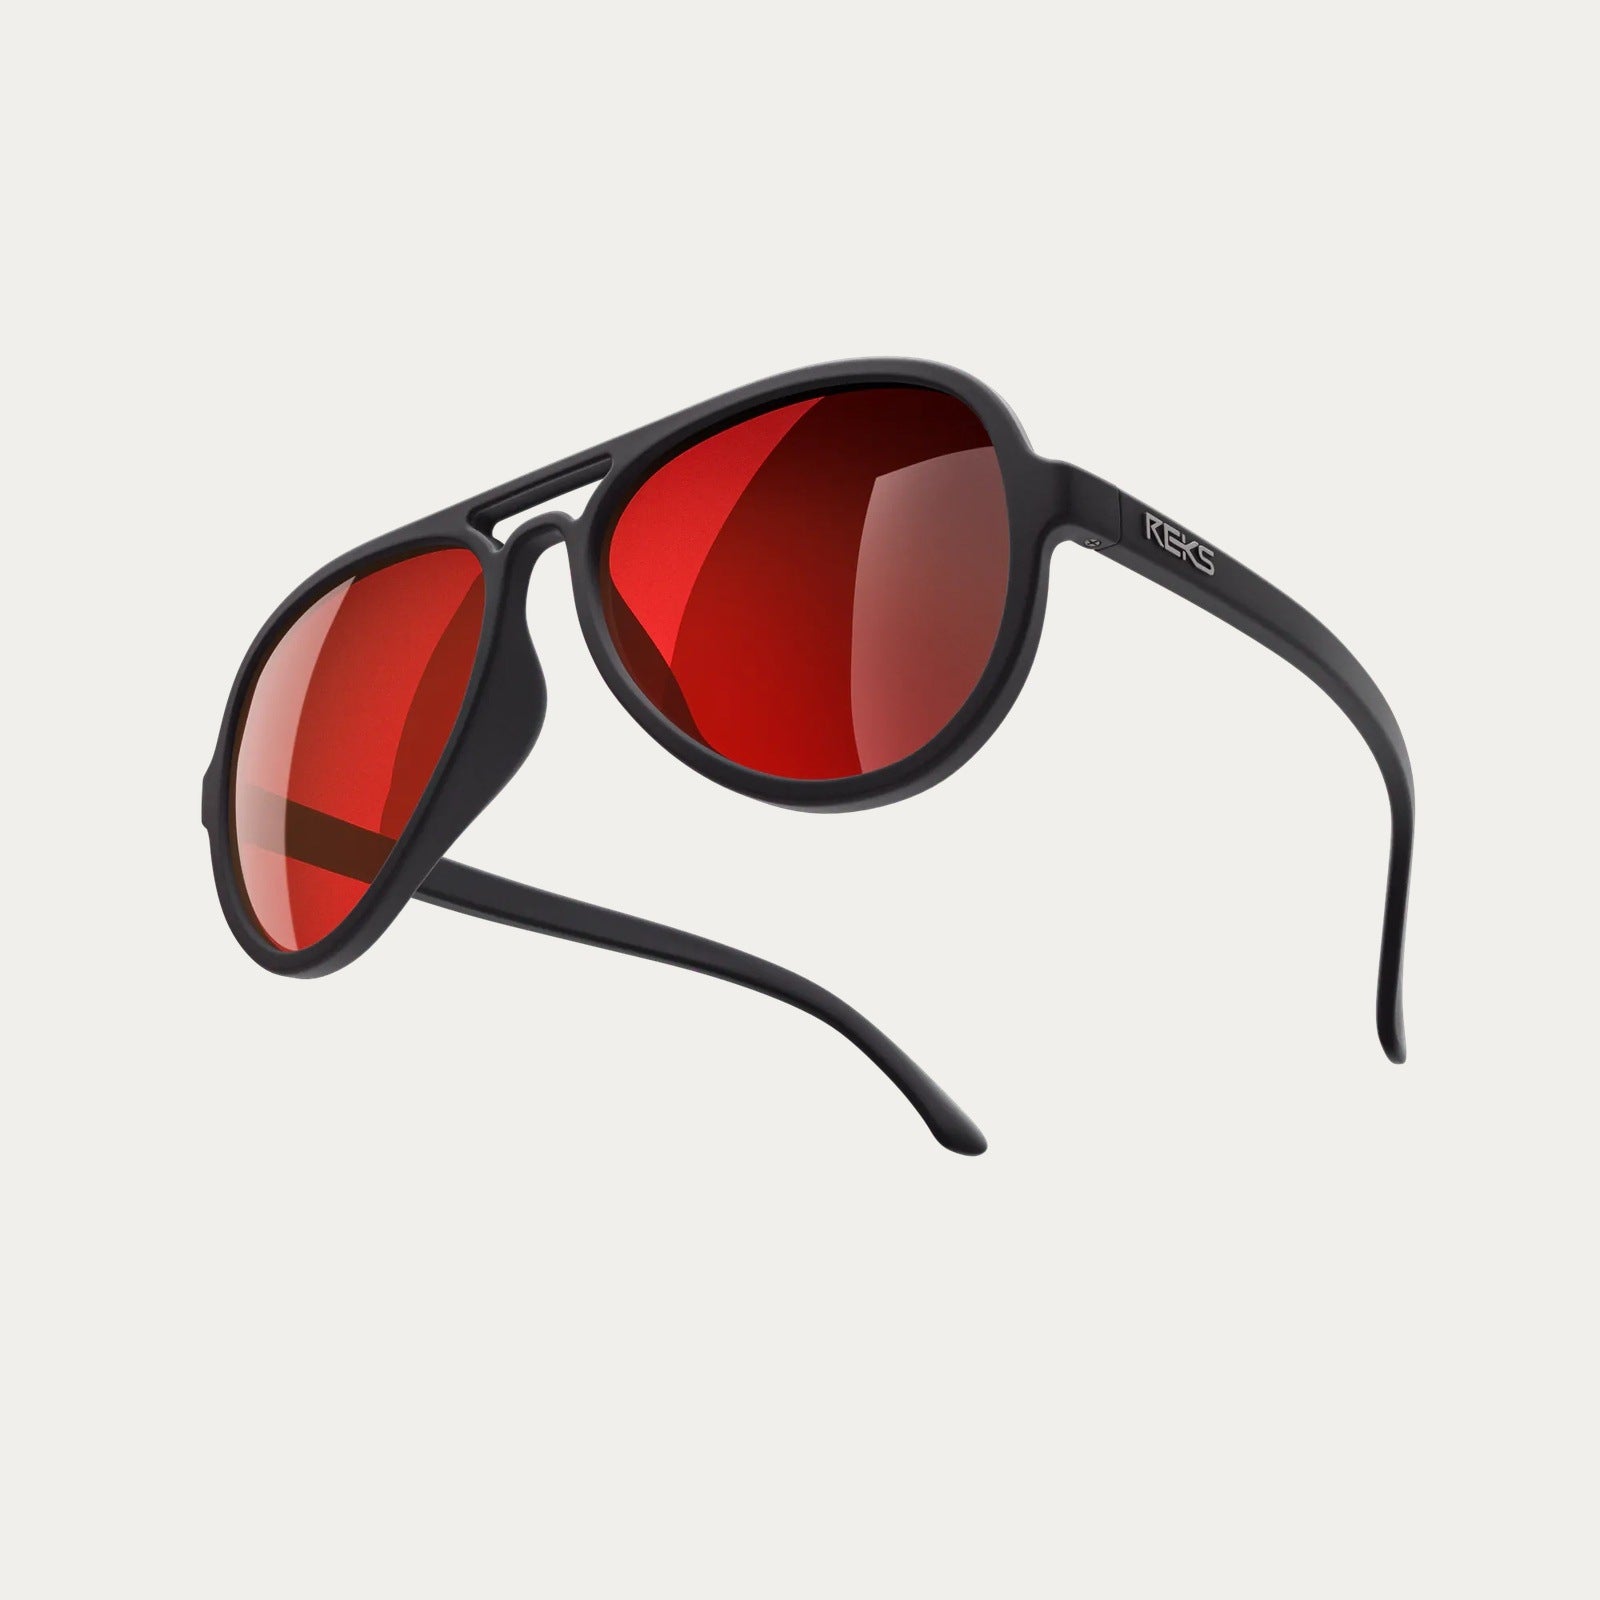 Reks | Aviator Prescription Polarized Polycarbonate Sunglasses Solid Smoke Red Mirror